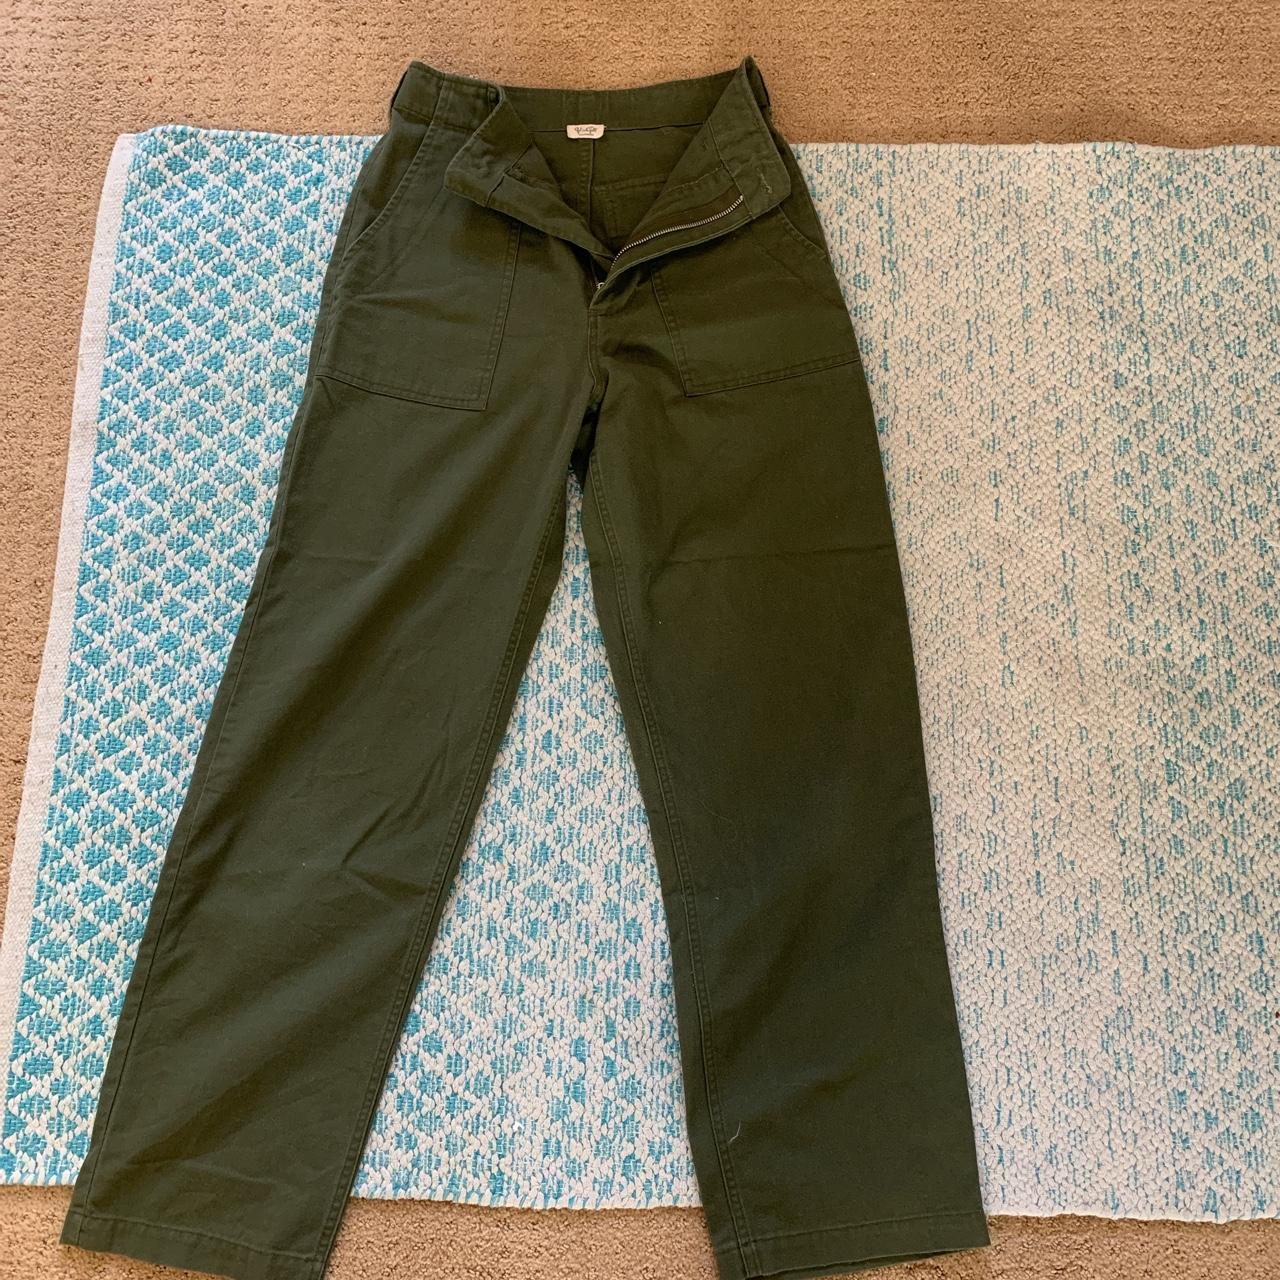 John Galt/ Dark Green/ Army pants / One size fits... - Depop